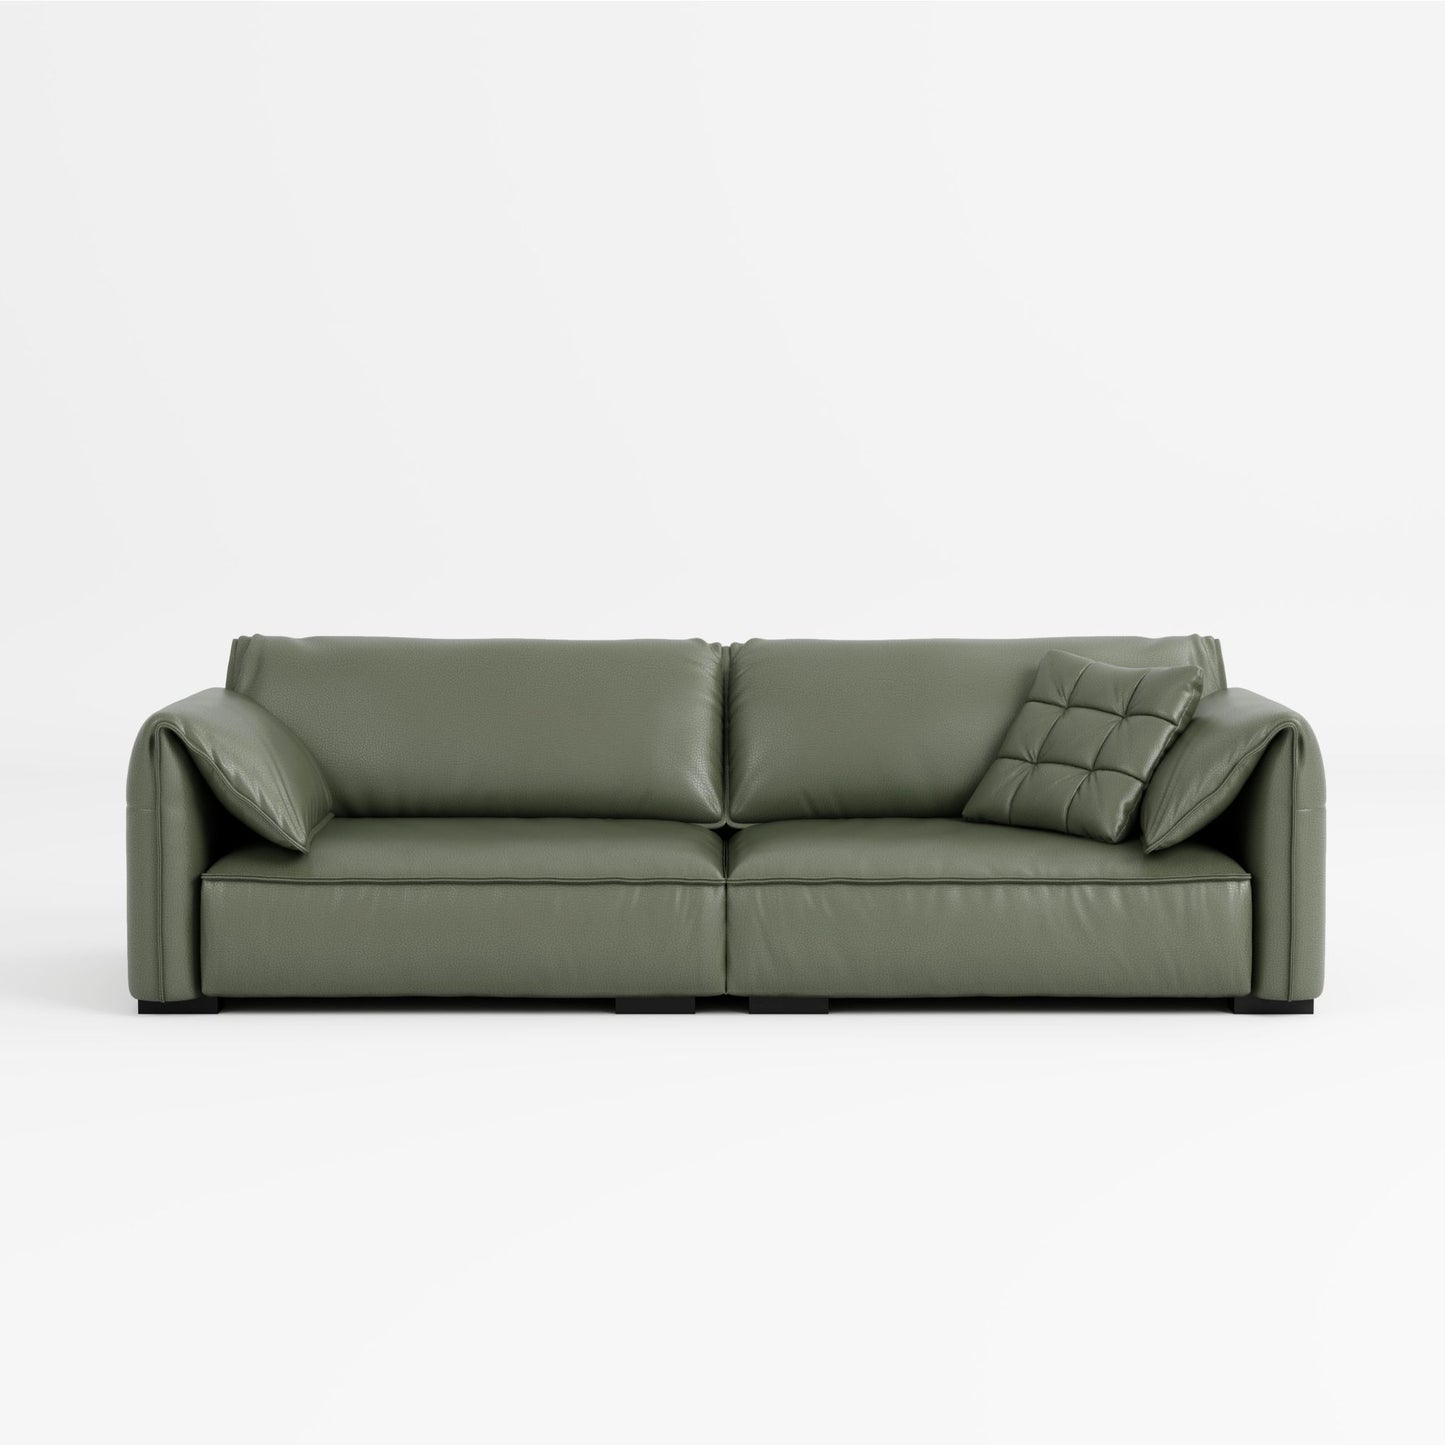 Comfy green top grain full leather sofa